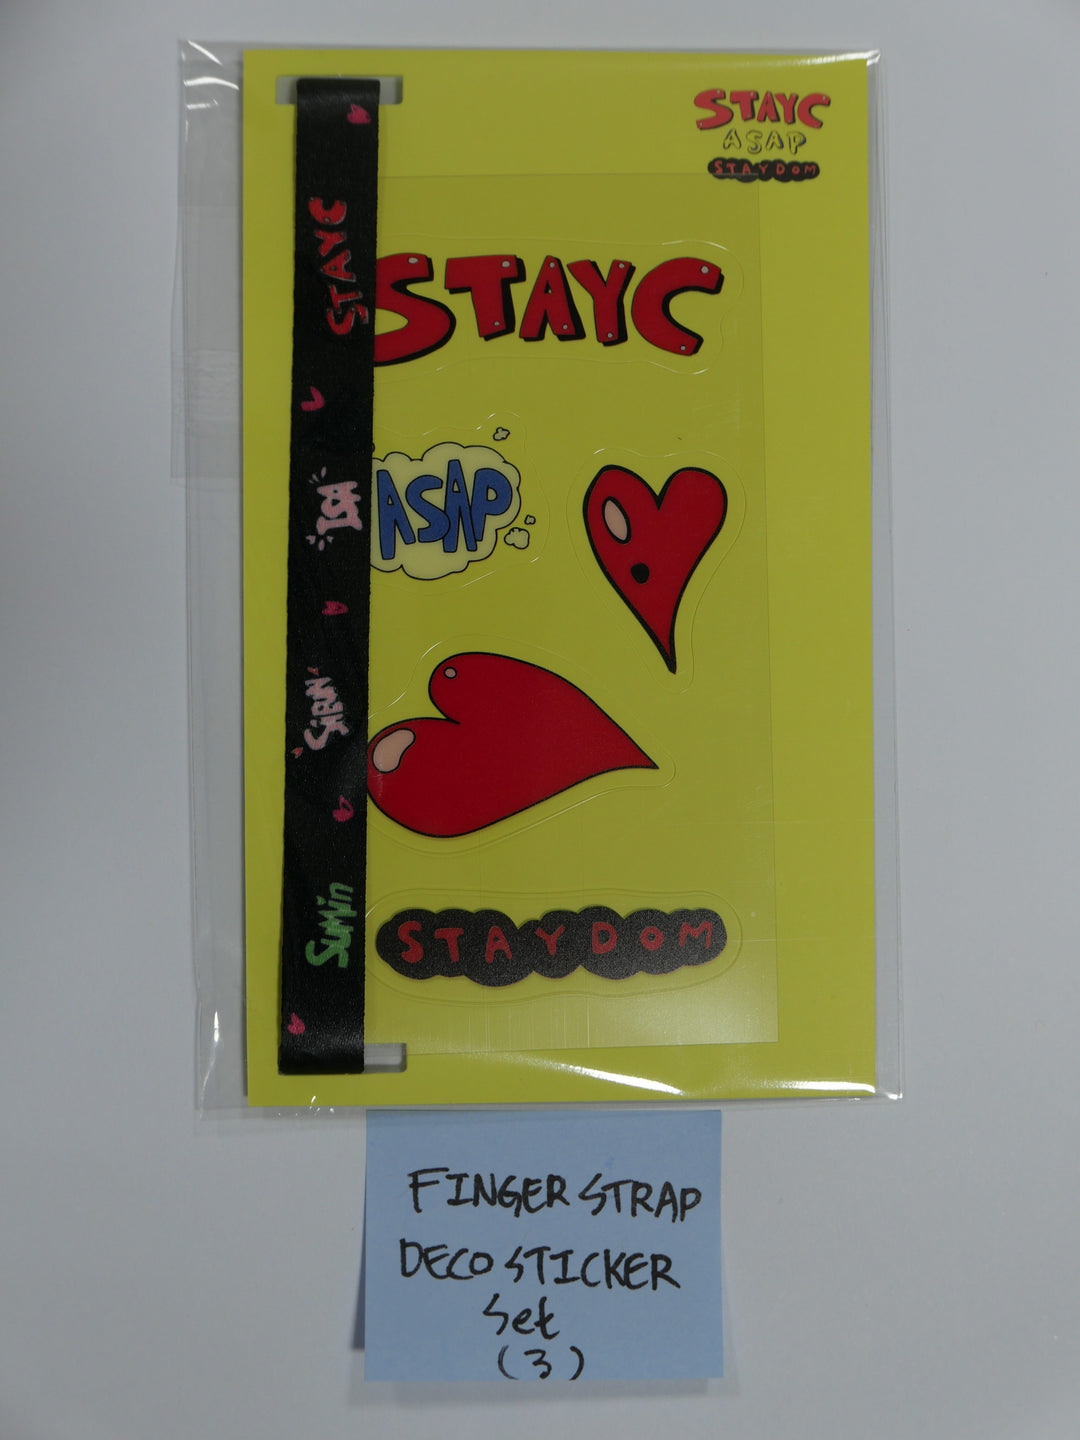 StayC [Staydom] - Official MD